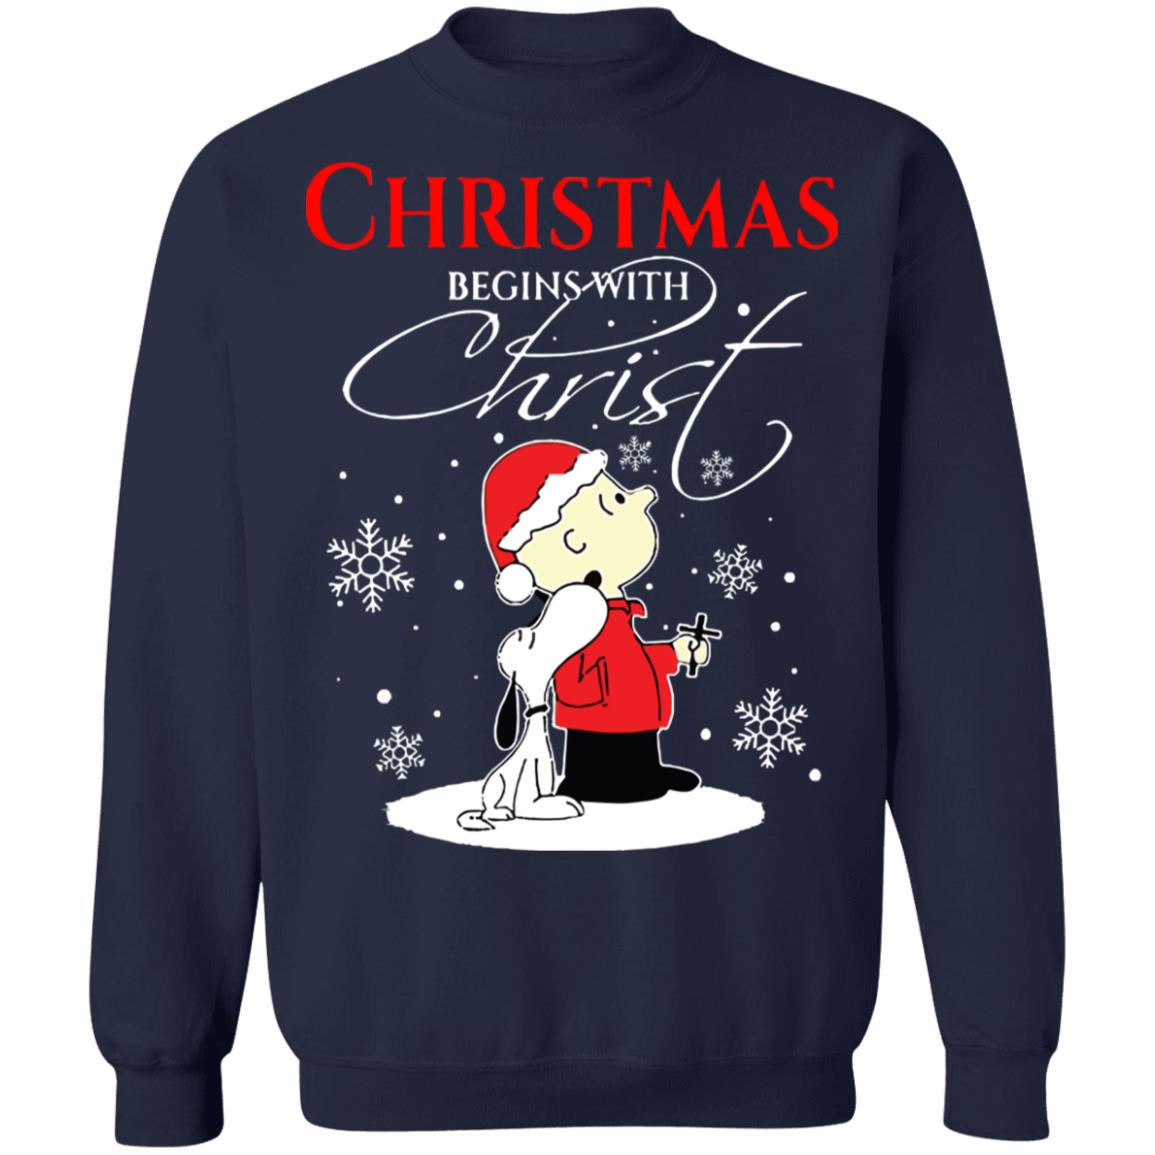 Christmas begins with Christ Charlie Brown Snoopy sweatshirt